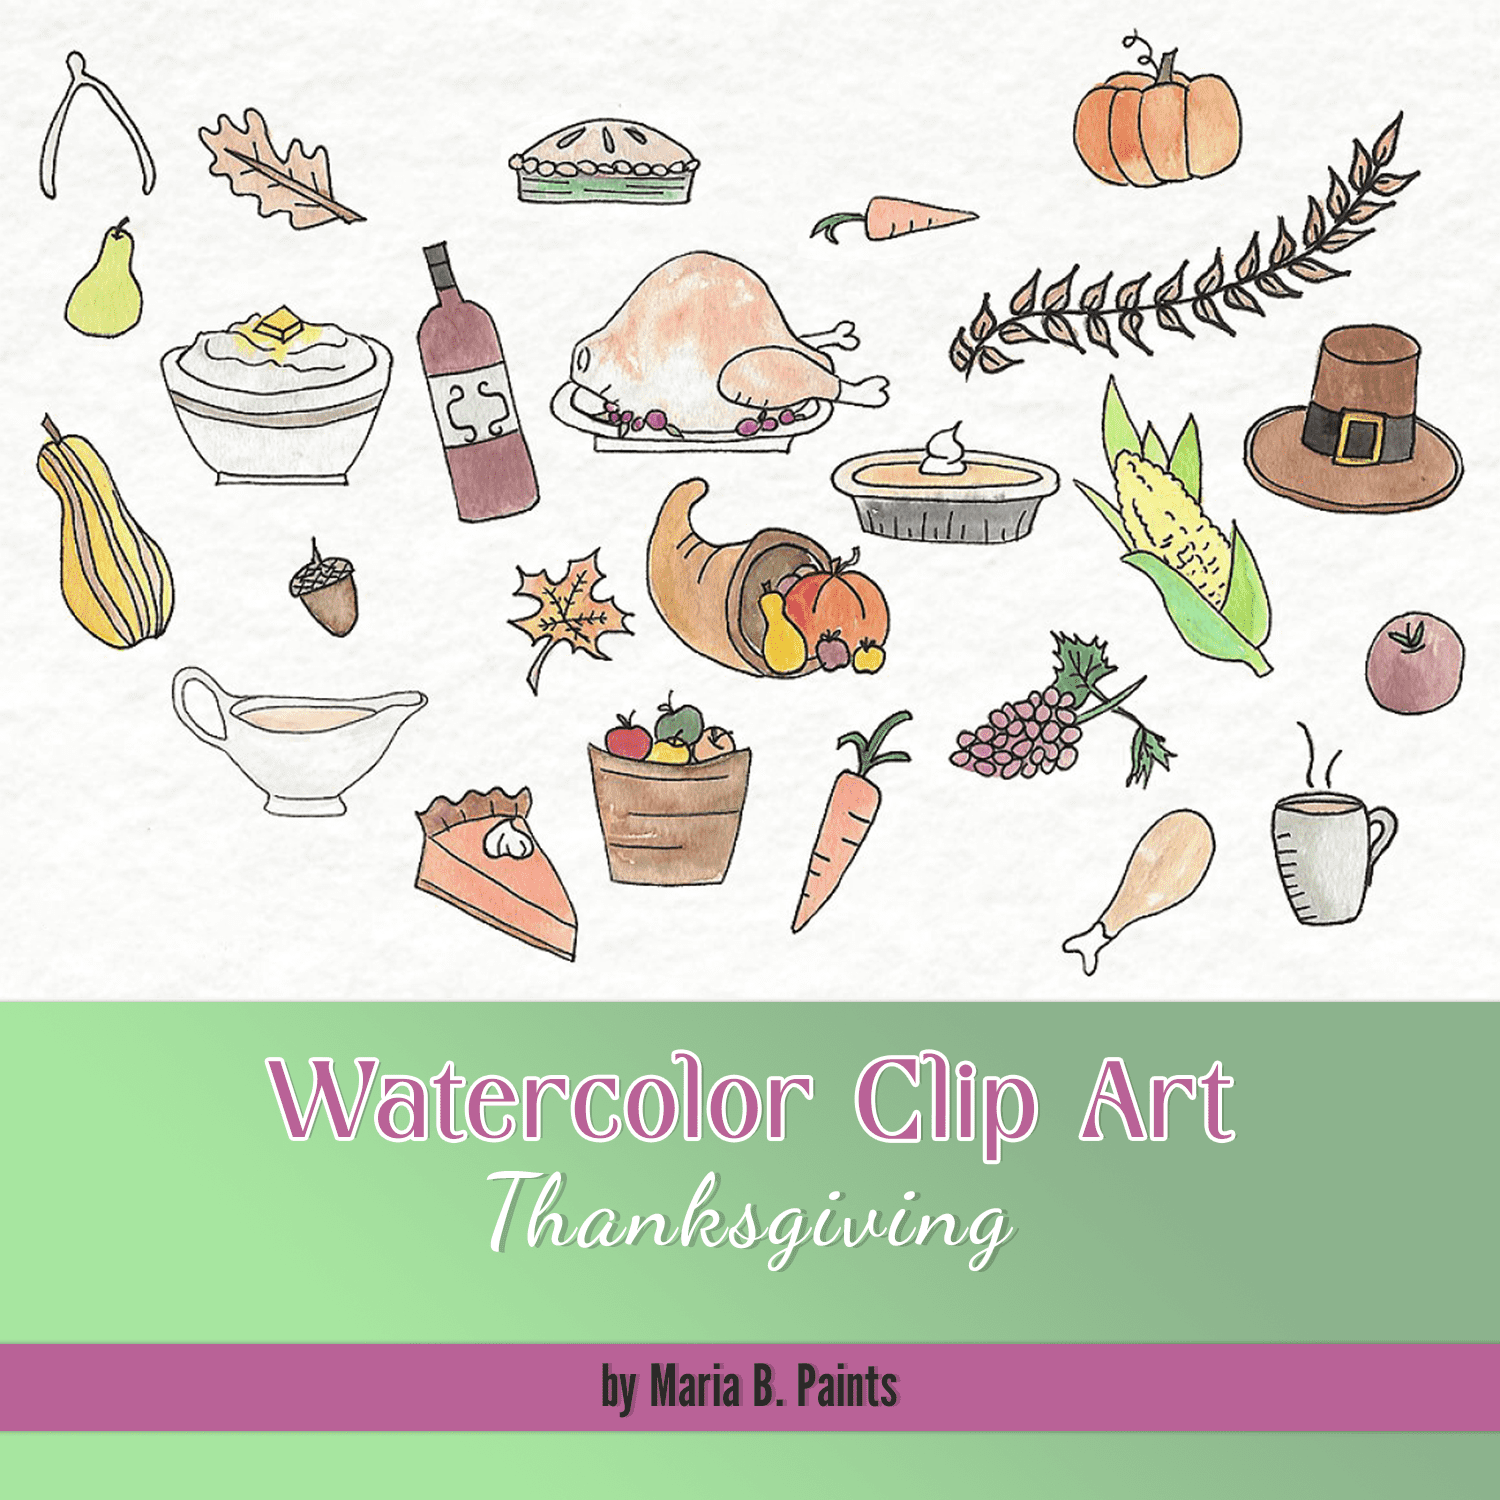 Watercolor Clip Art - Thanksgiving cover.